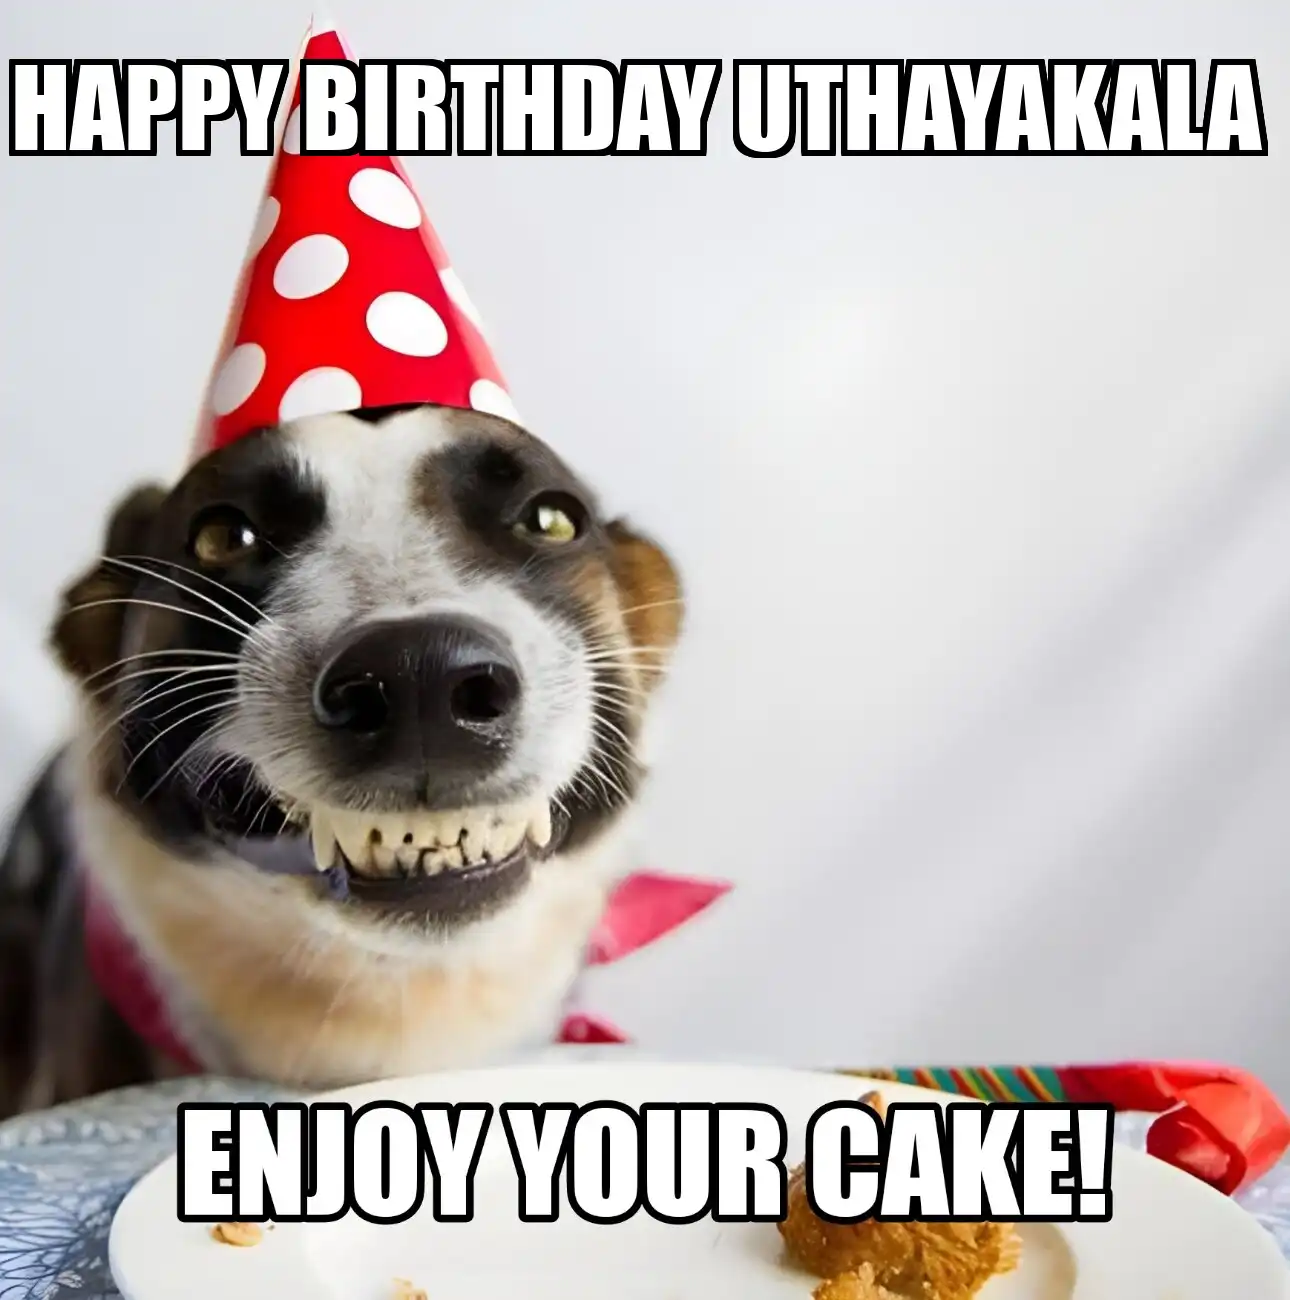 Happy Birthday Uthayakala Enjoy Your Cake Dog Meme